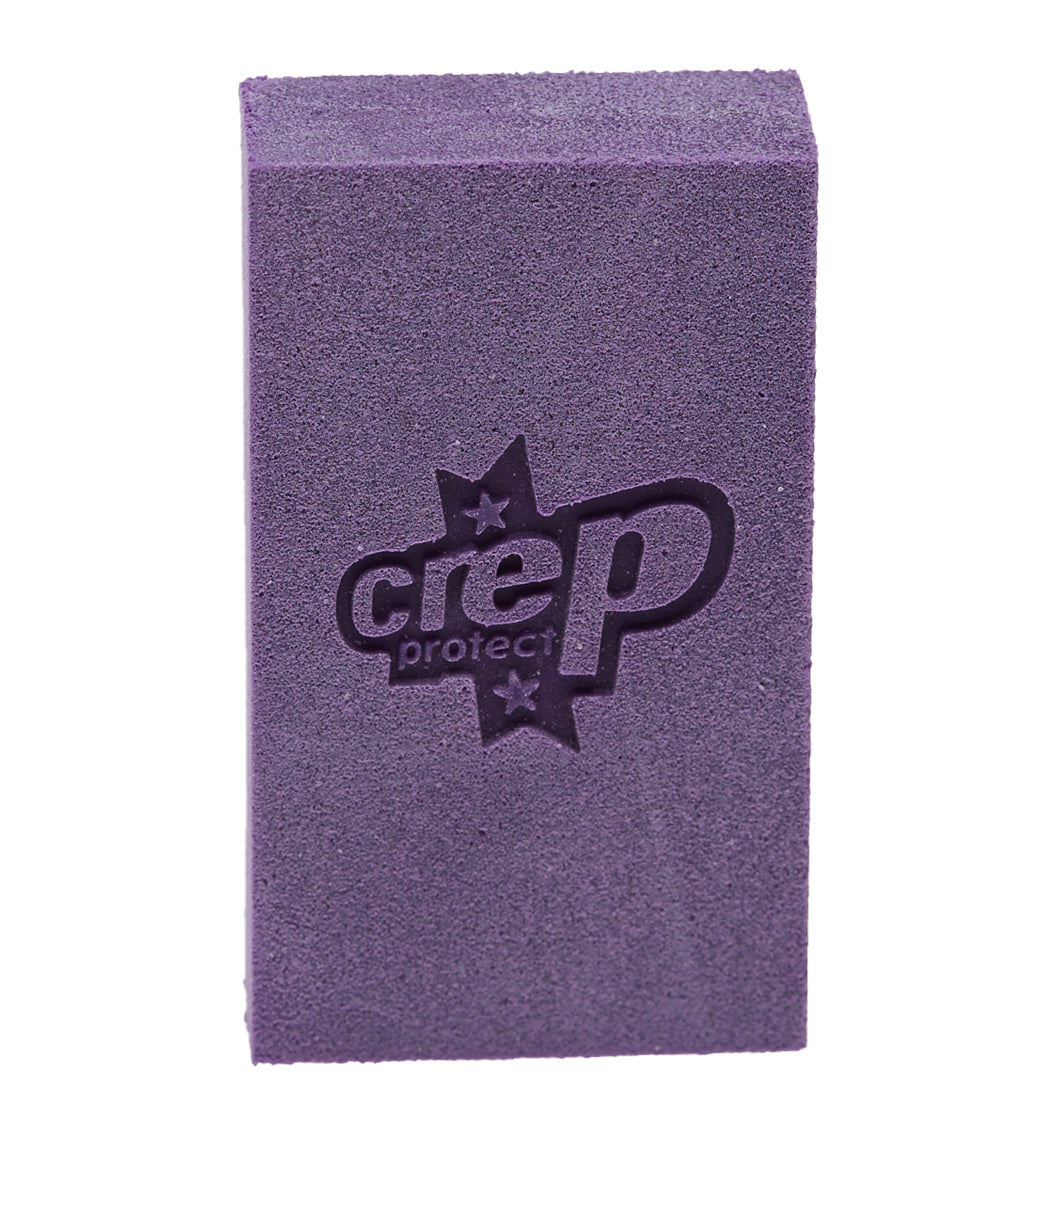 CREP PROTECT - Eraser